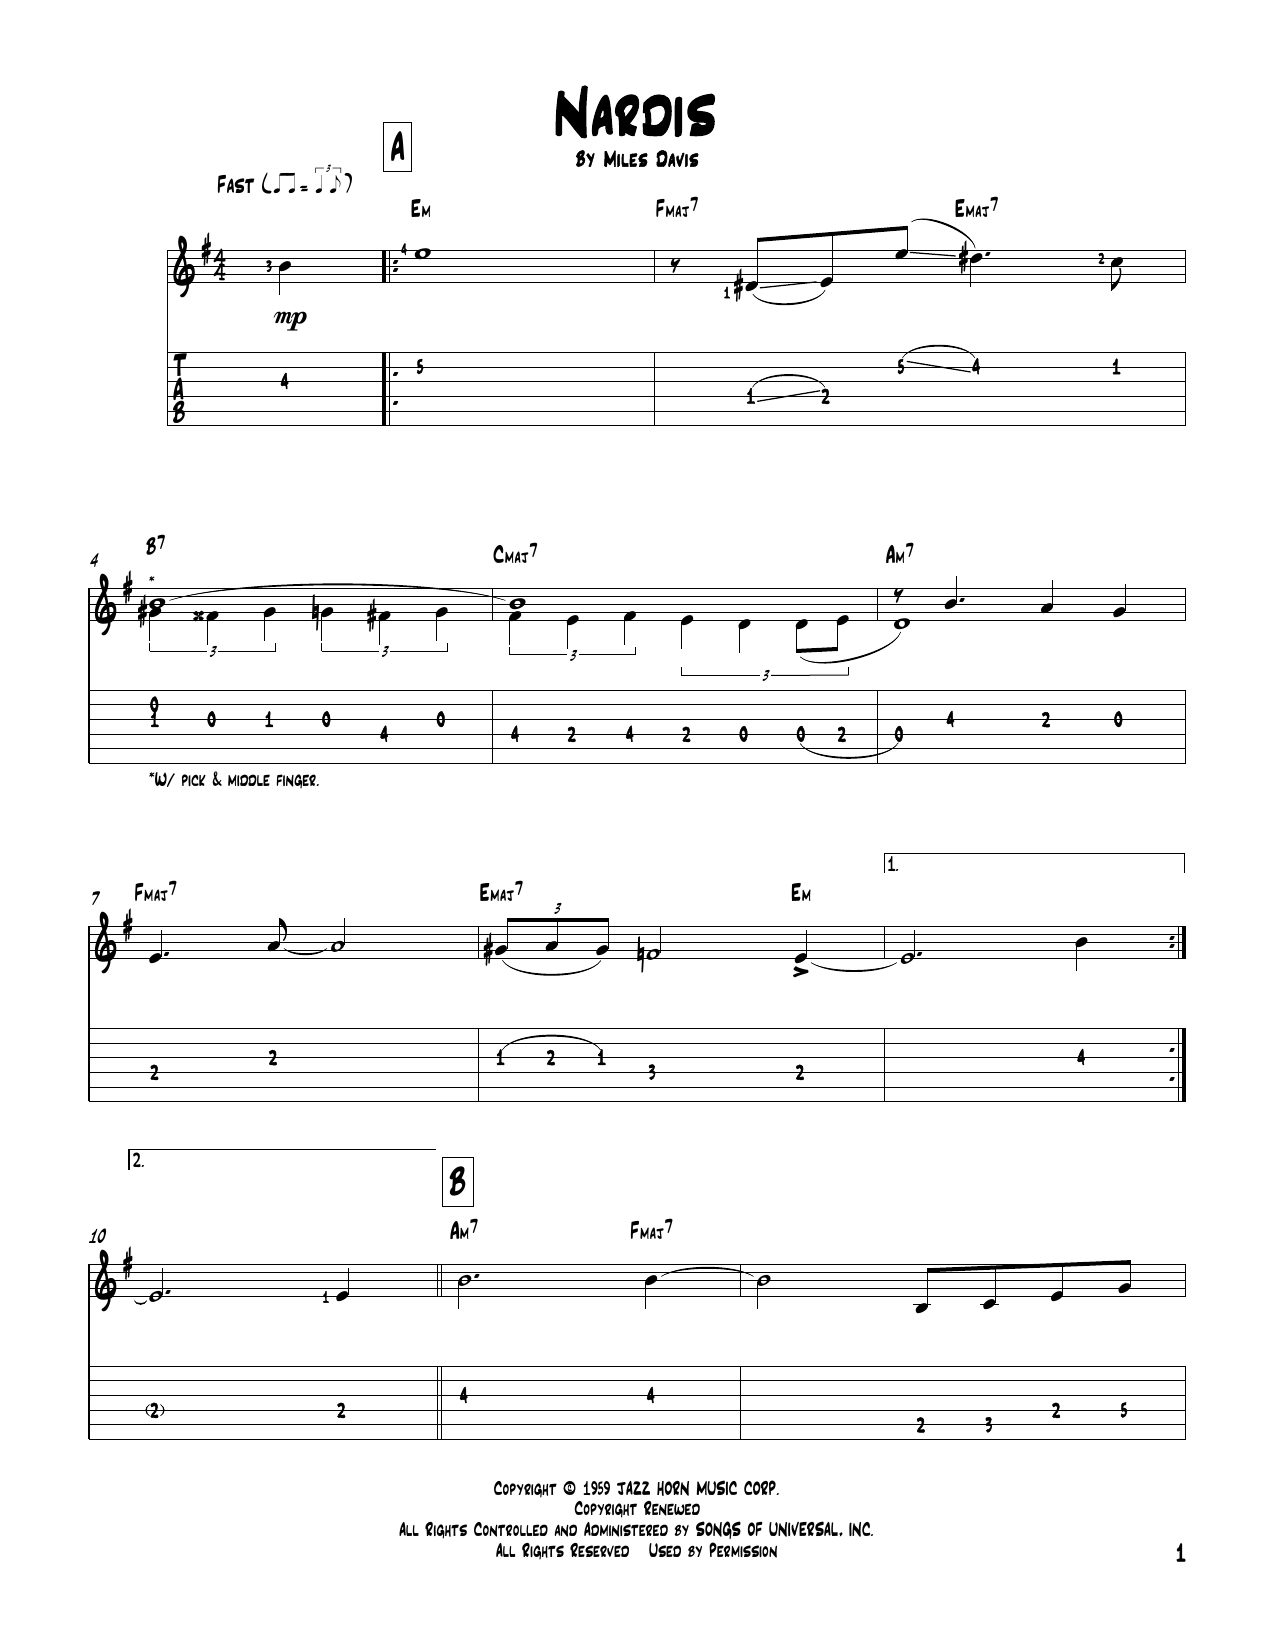 Bill Evans Nardis Sheet Music Notes & Chords for Guitar Tab - Download or Print PDF